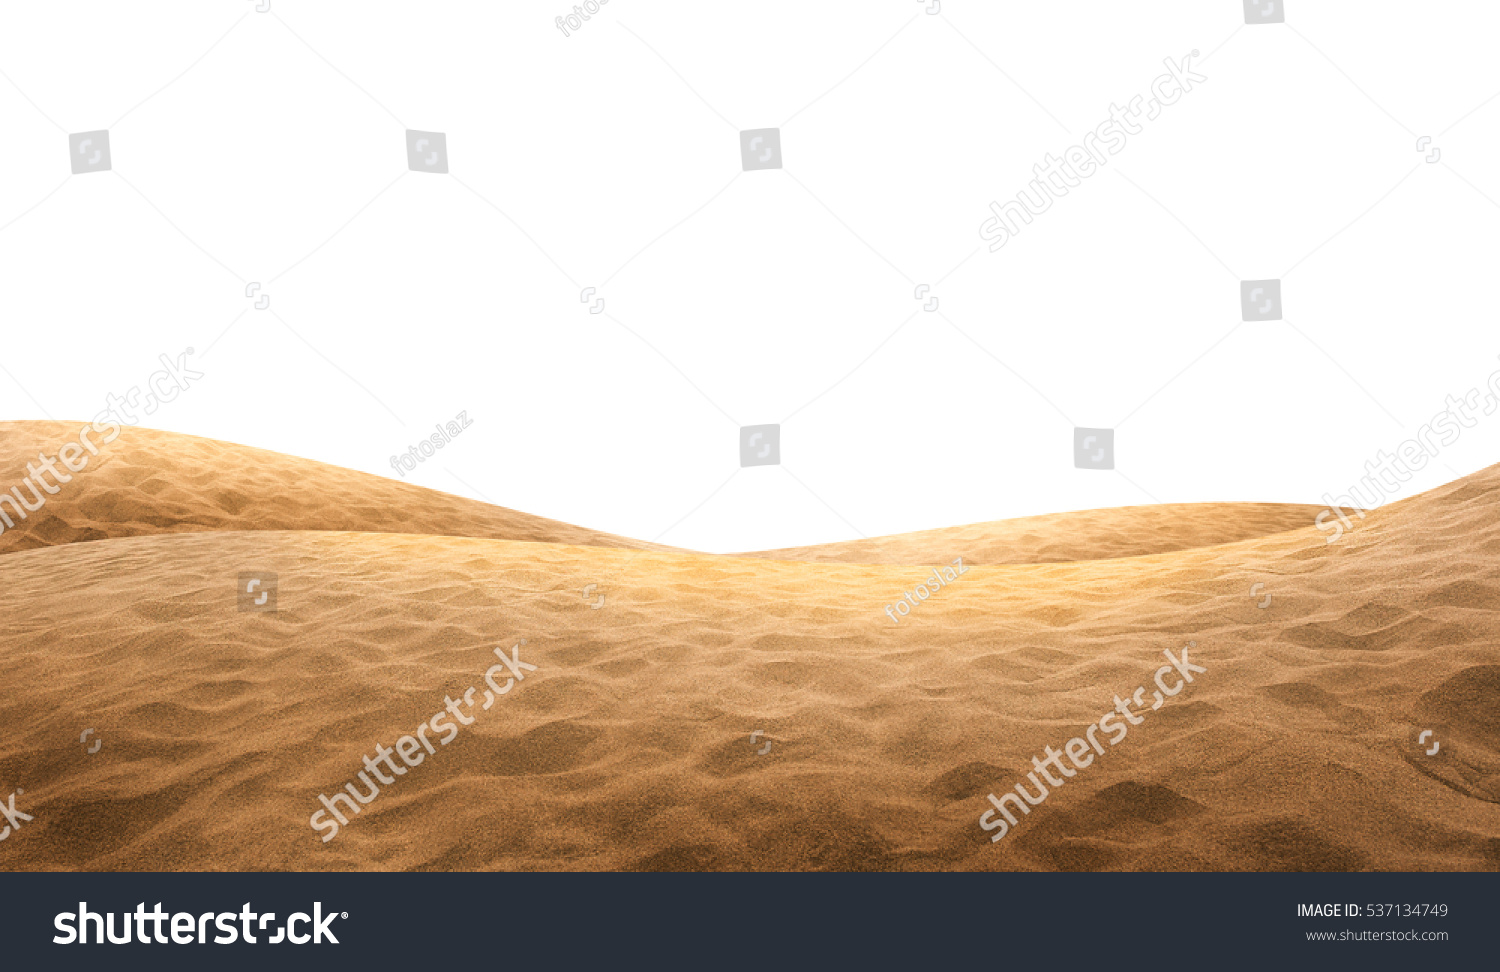 Desert sand isolated on white background #537134749